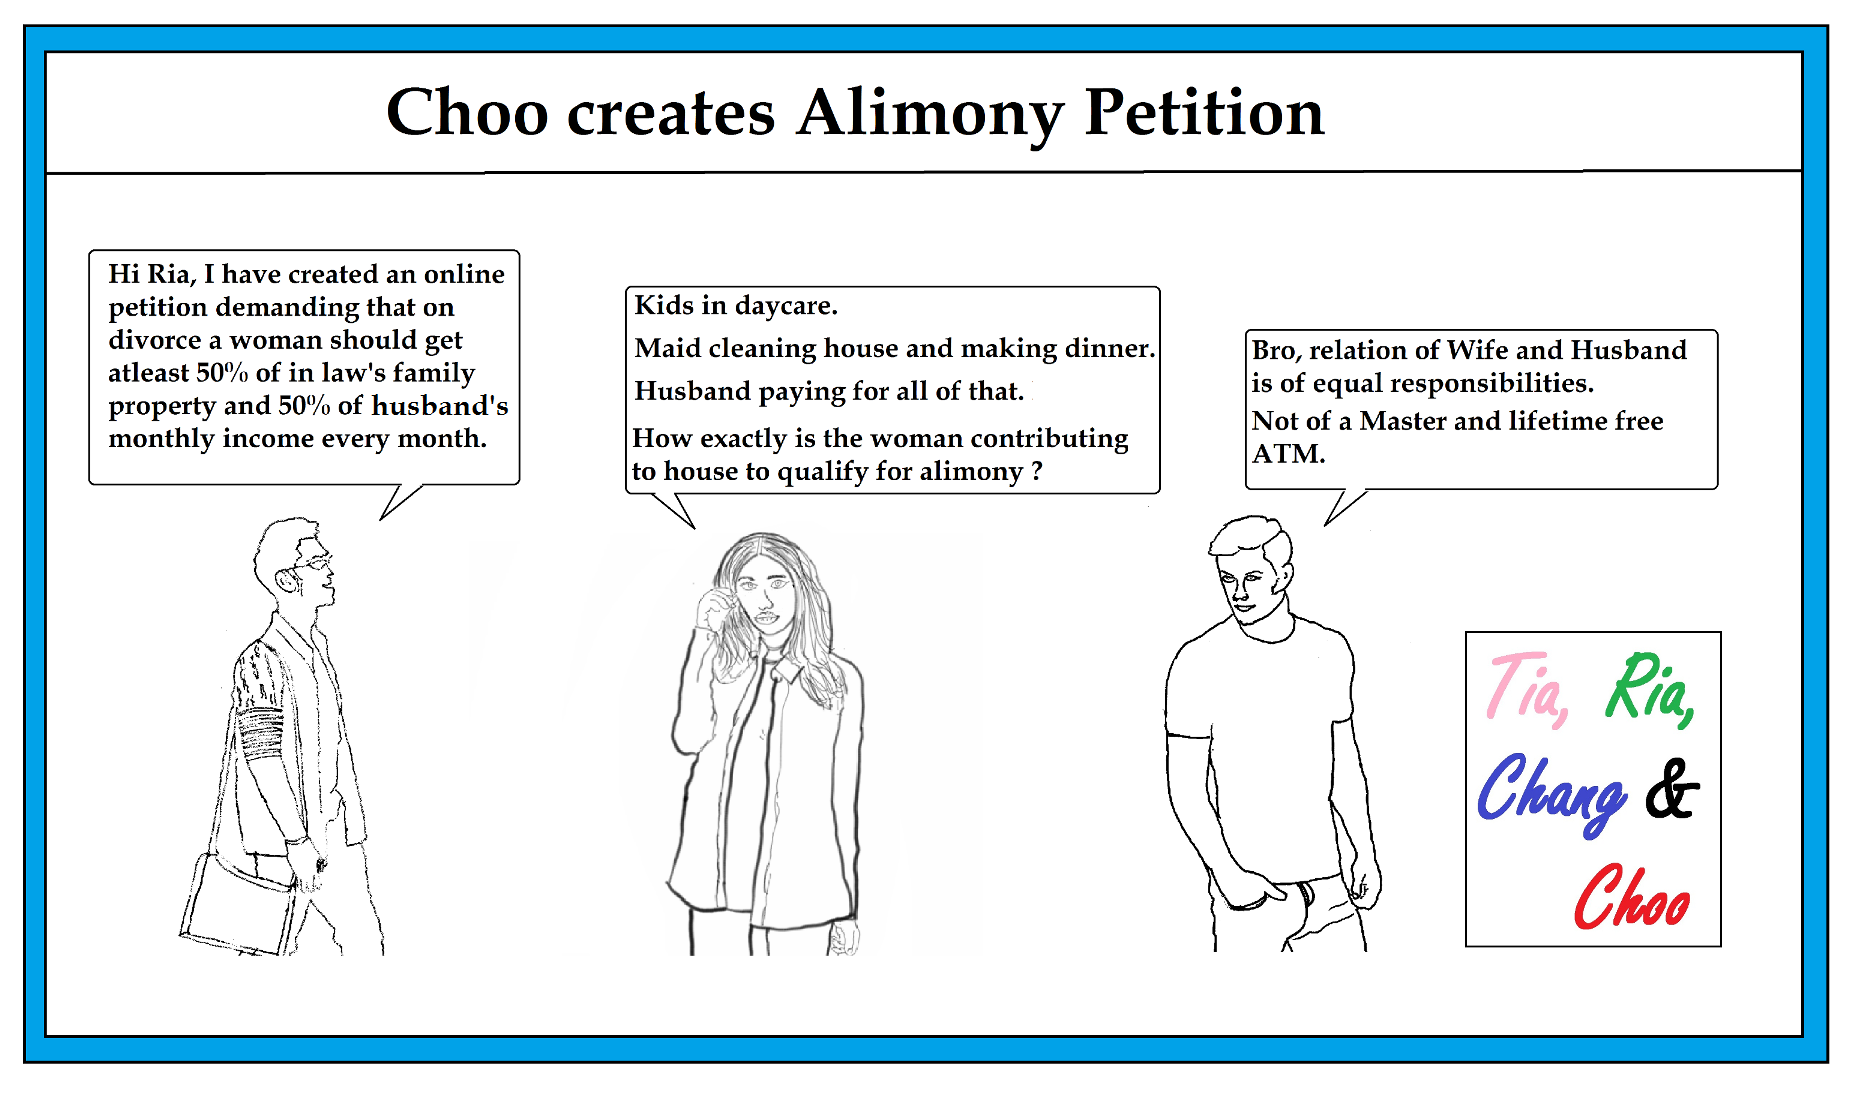 Choo creates Alimony Petition